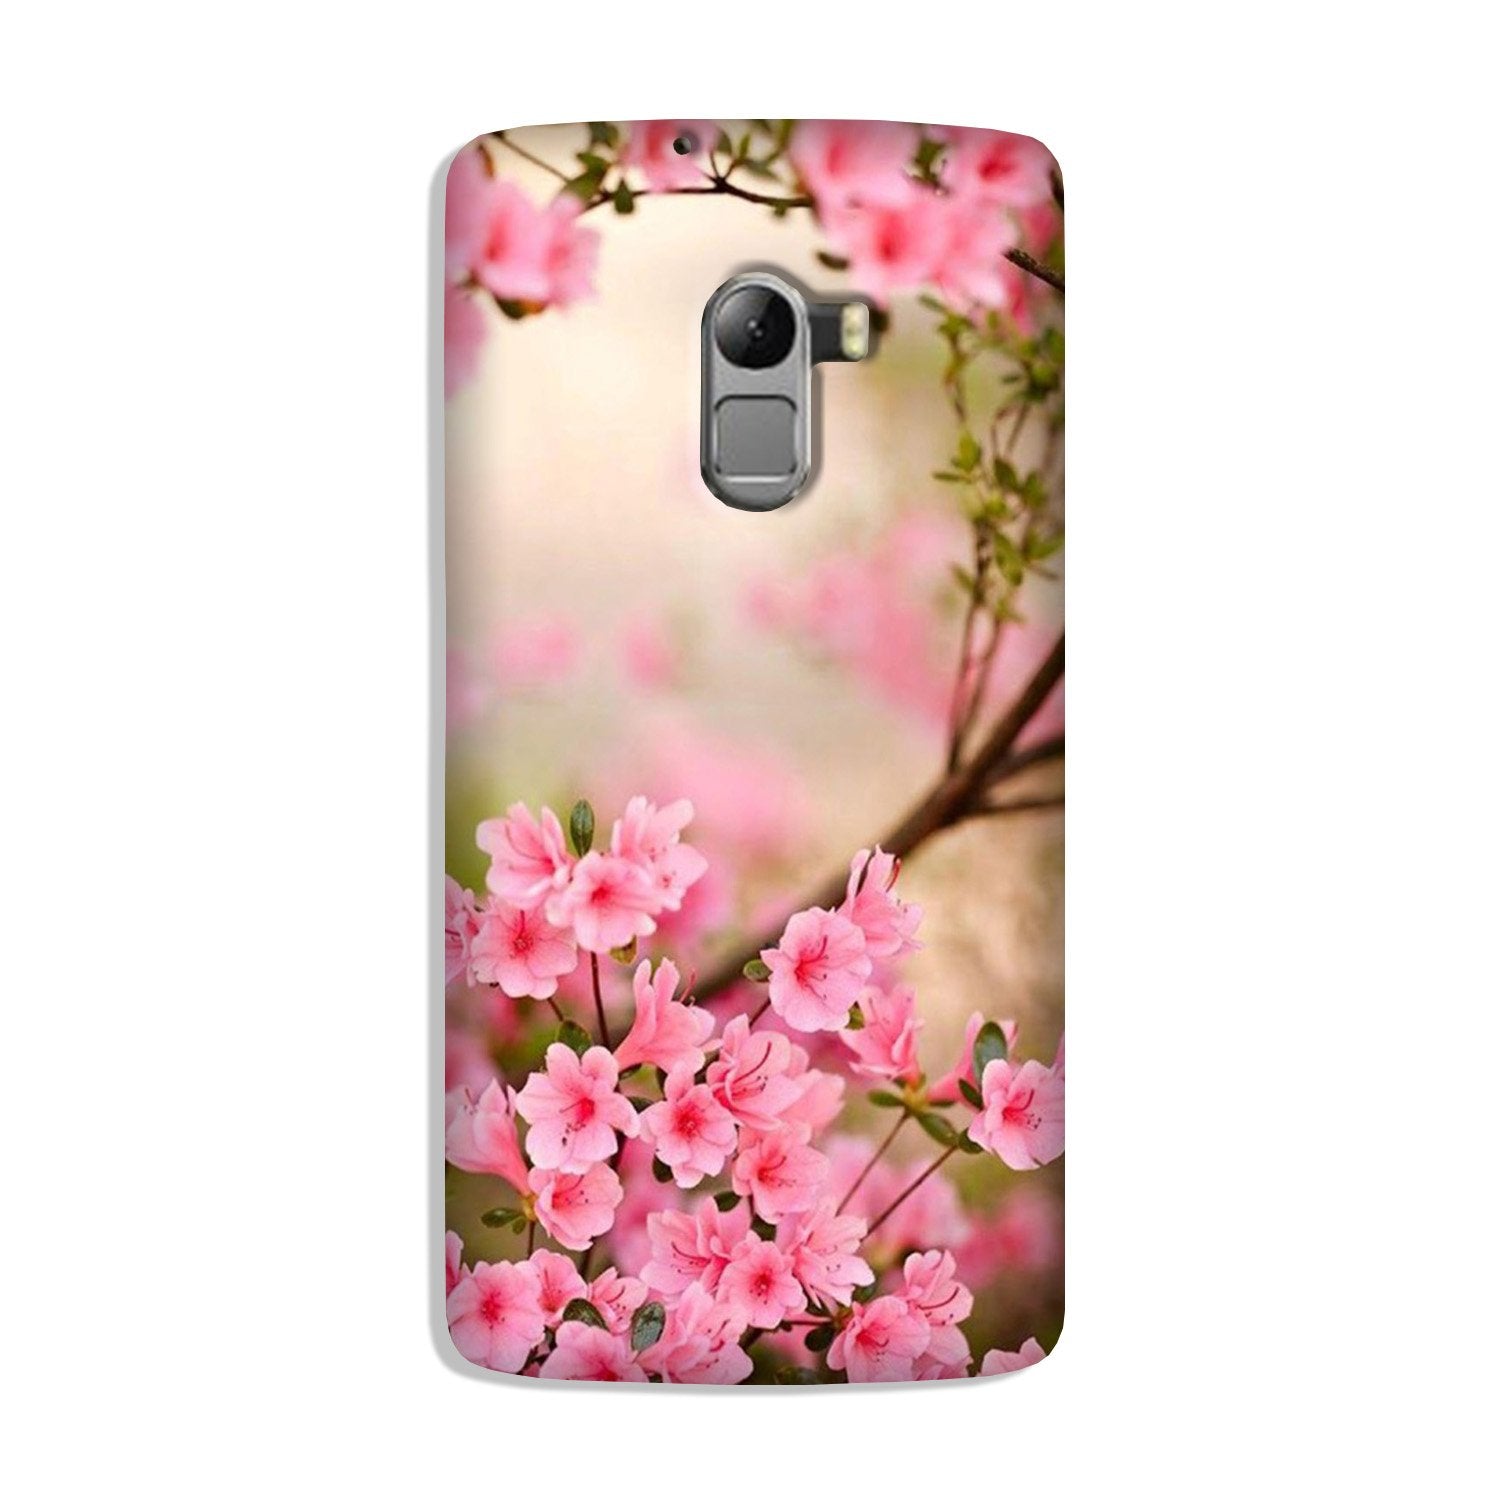 Pink flowers Case for Lenovo K4 Note